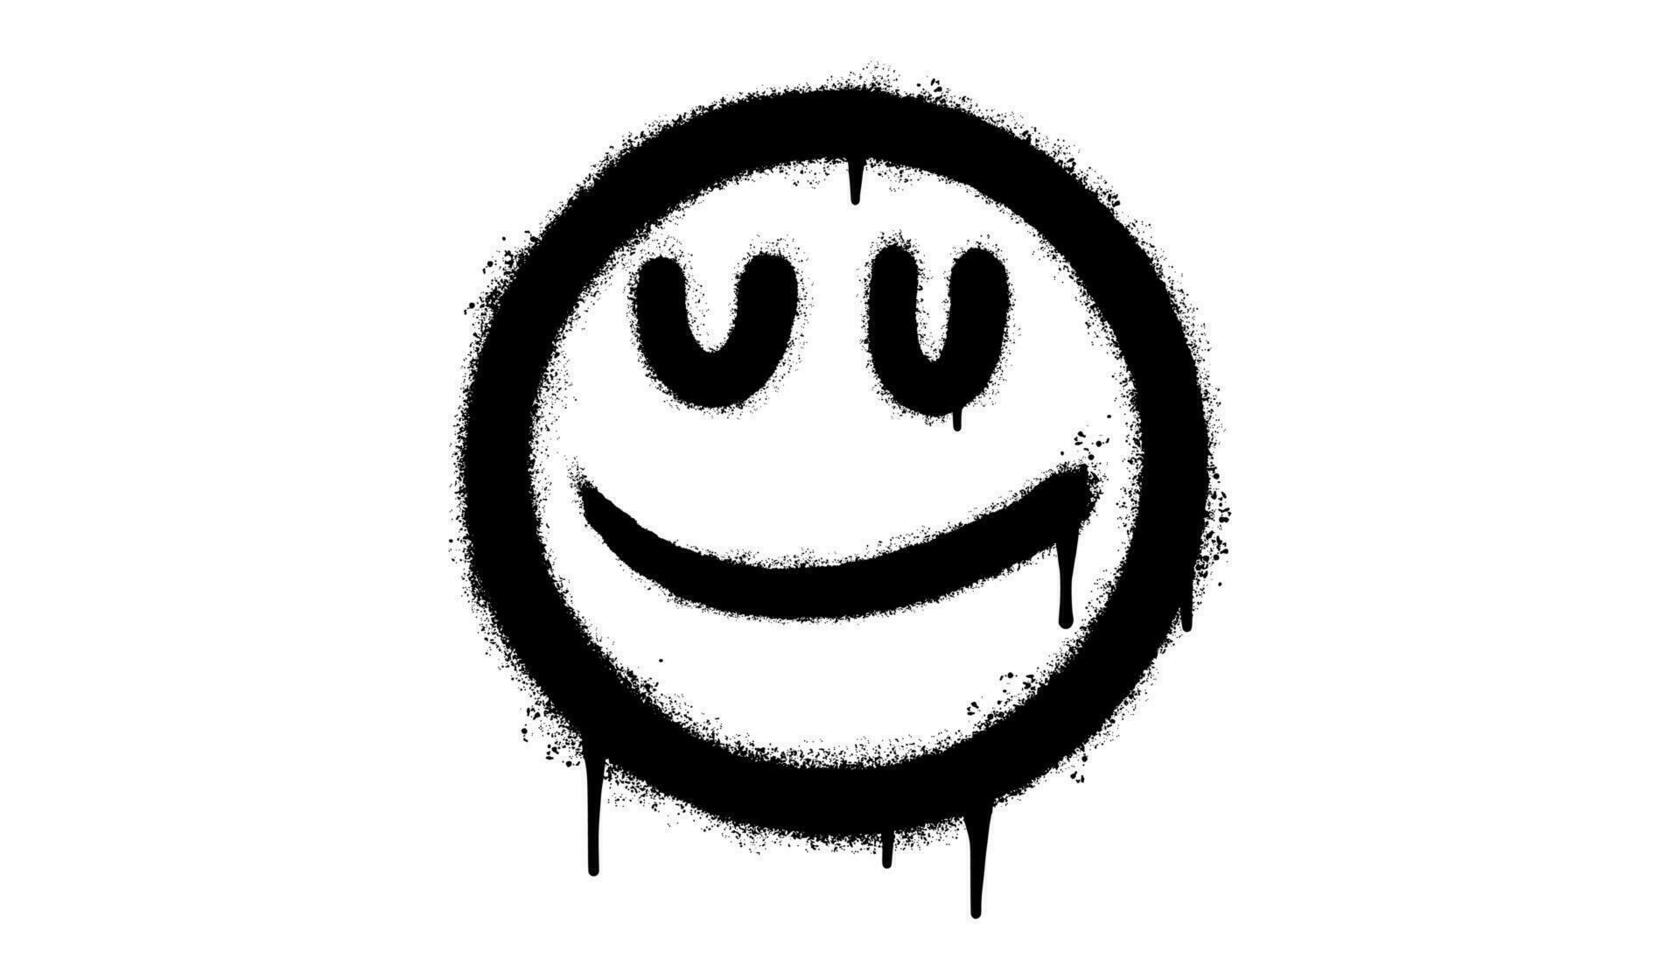 spray pintado grafite sorridente face emoticon isolado em branco fundo. vetor